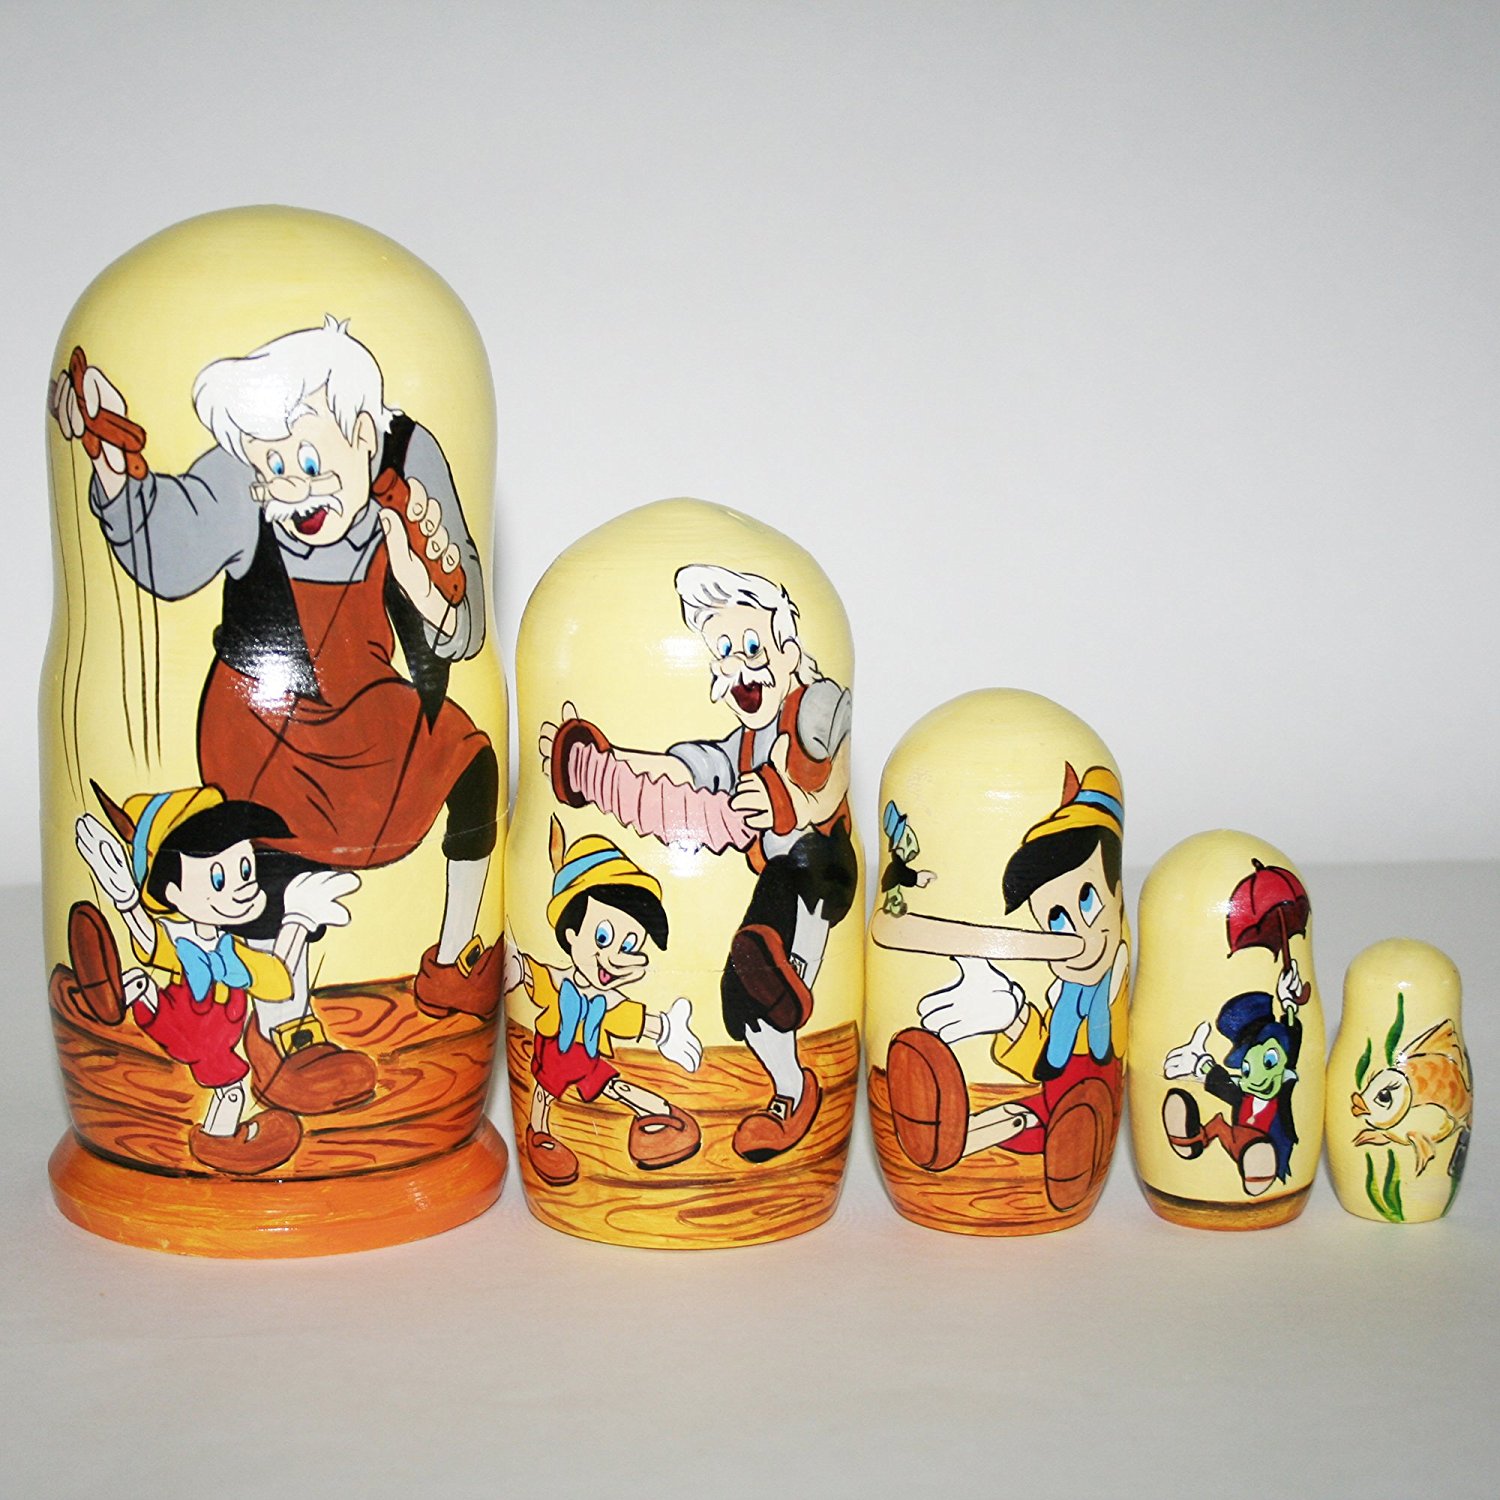 Charming Vintage Style Handmade Pinocchio Nesting Dolls